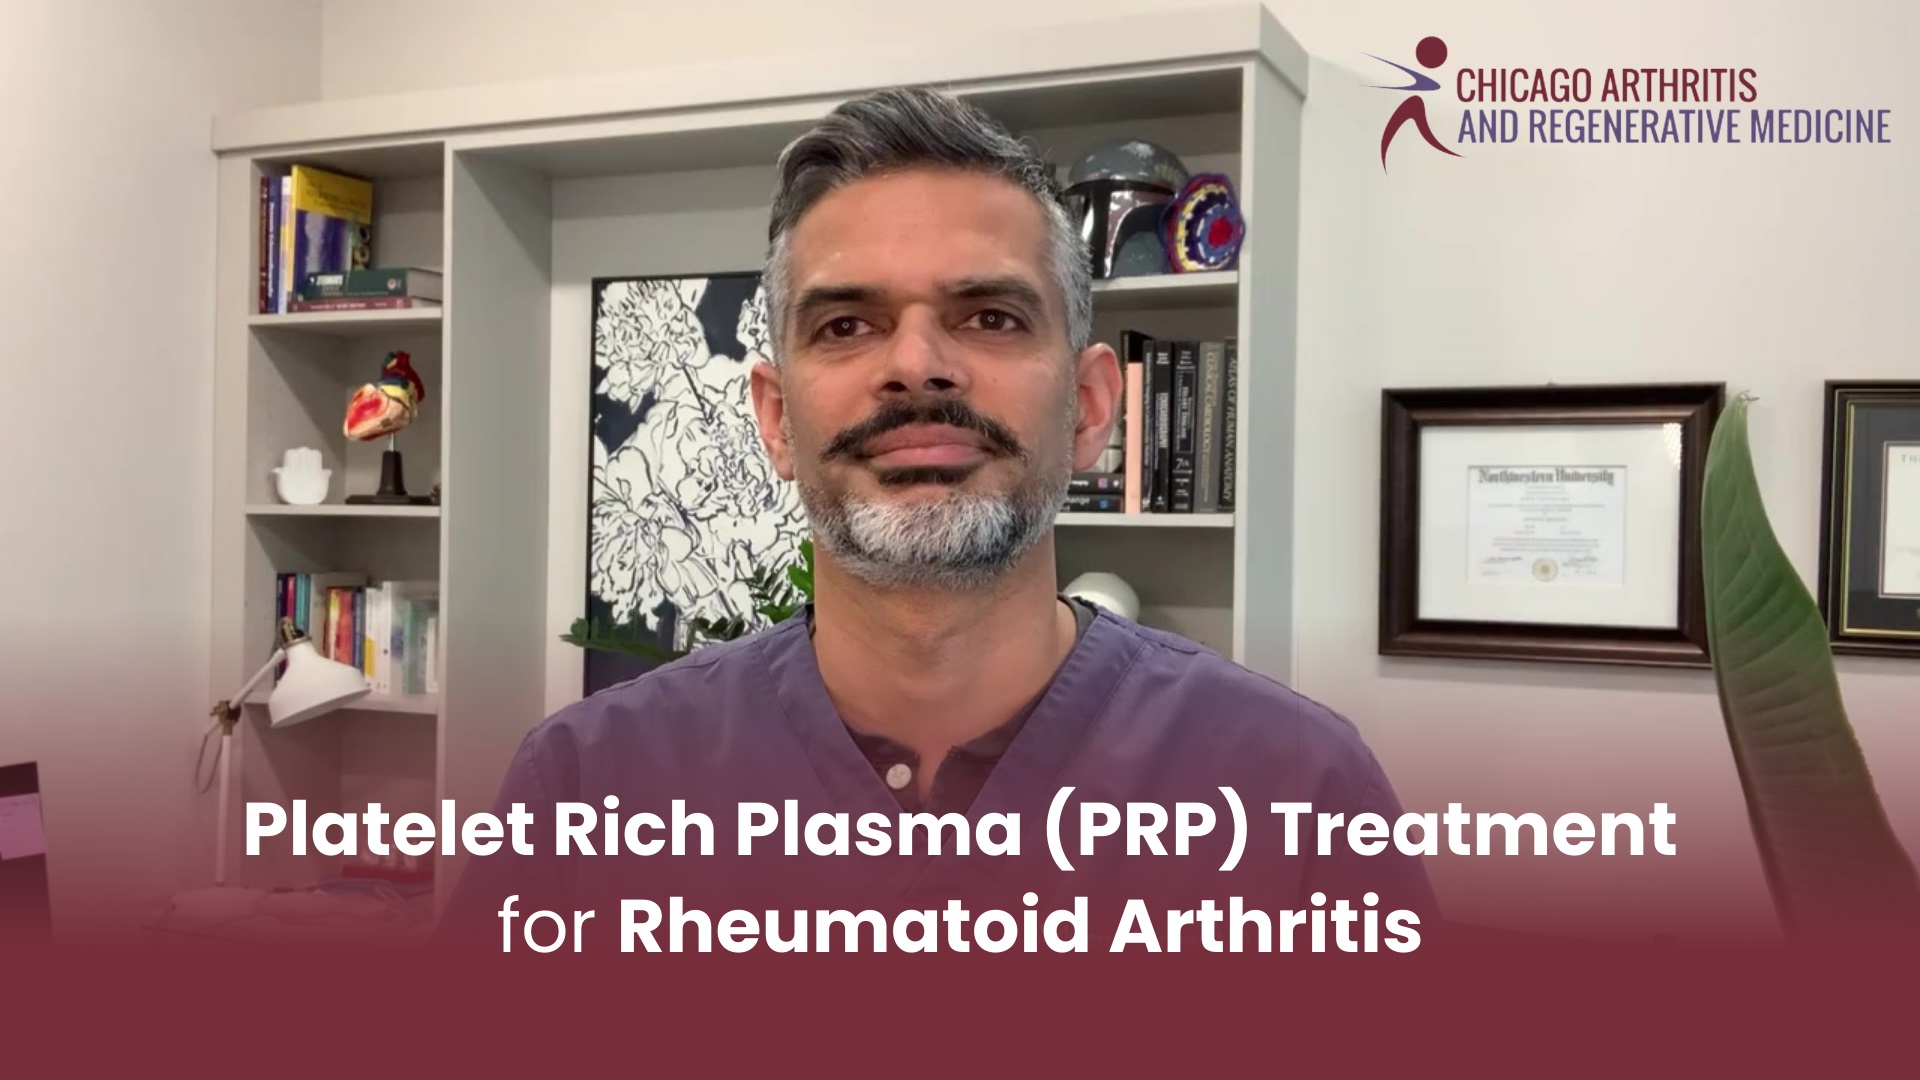 Can Platelet Rich Plasma help Treat Rheumatoid Arthritis?